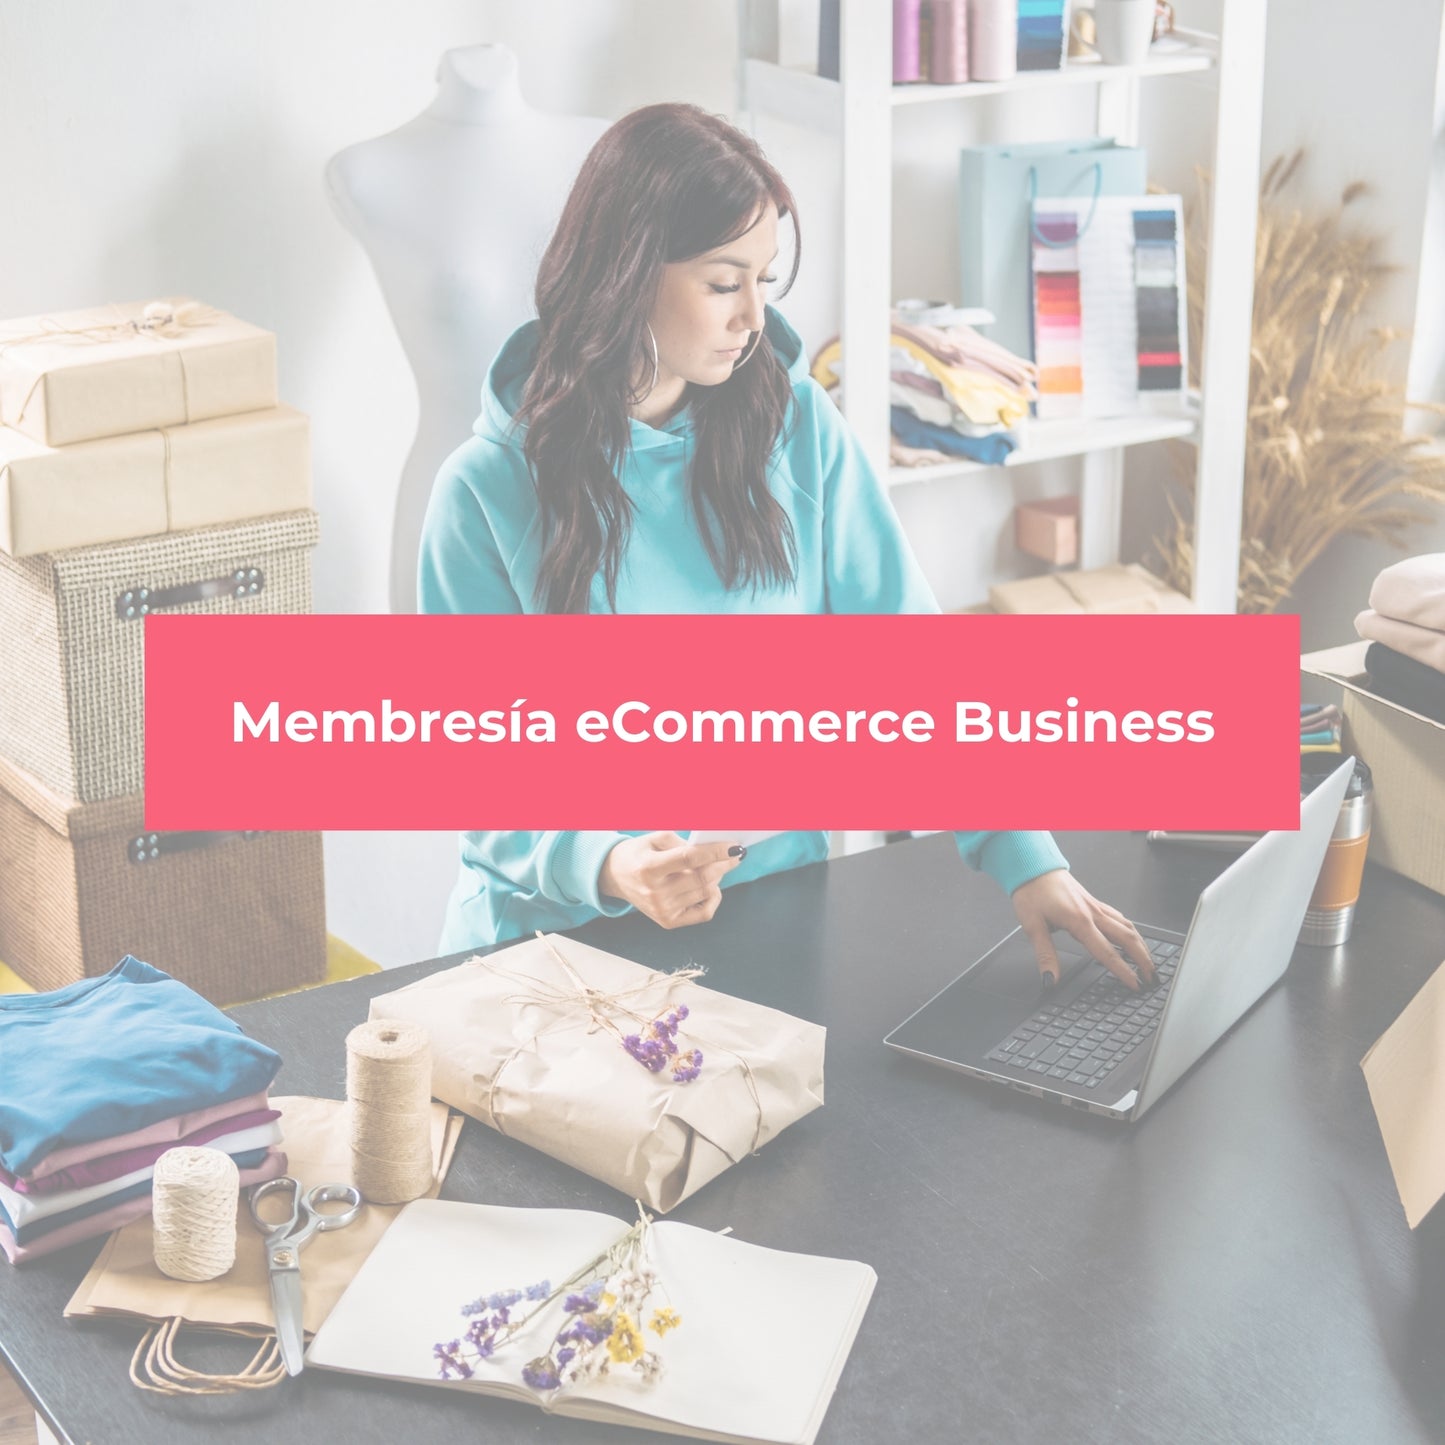 Membresía eCommerce Business